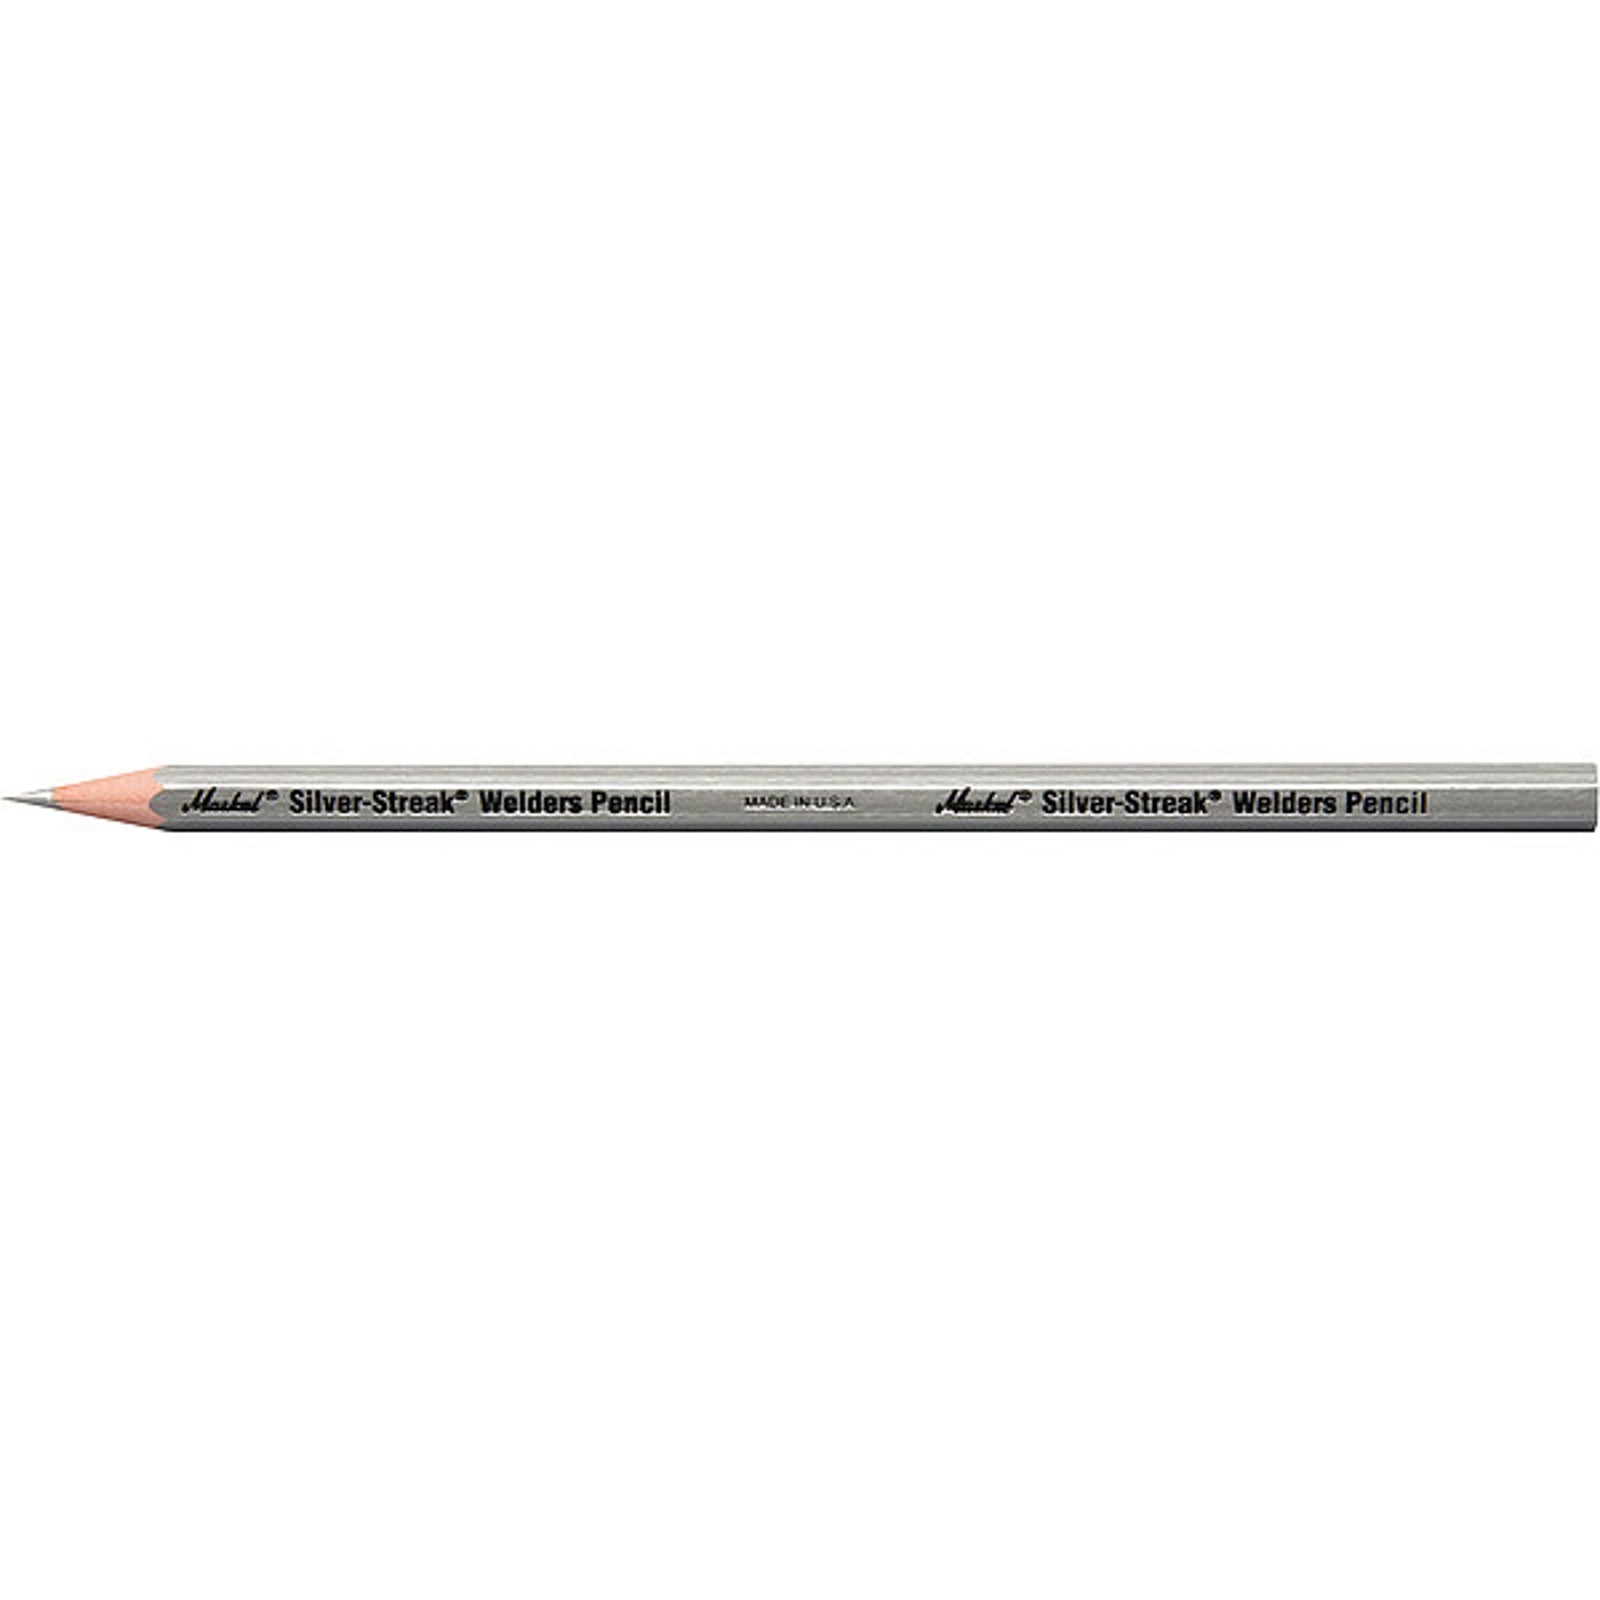 Silver Streak Welders Pencil with 12 Pcs Round Silver Refills